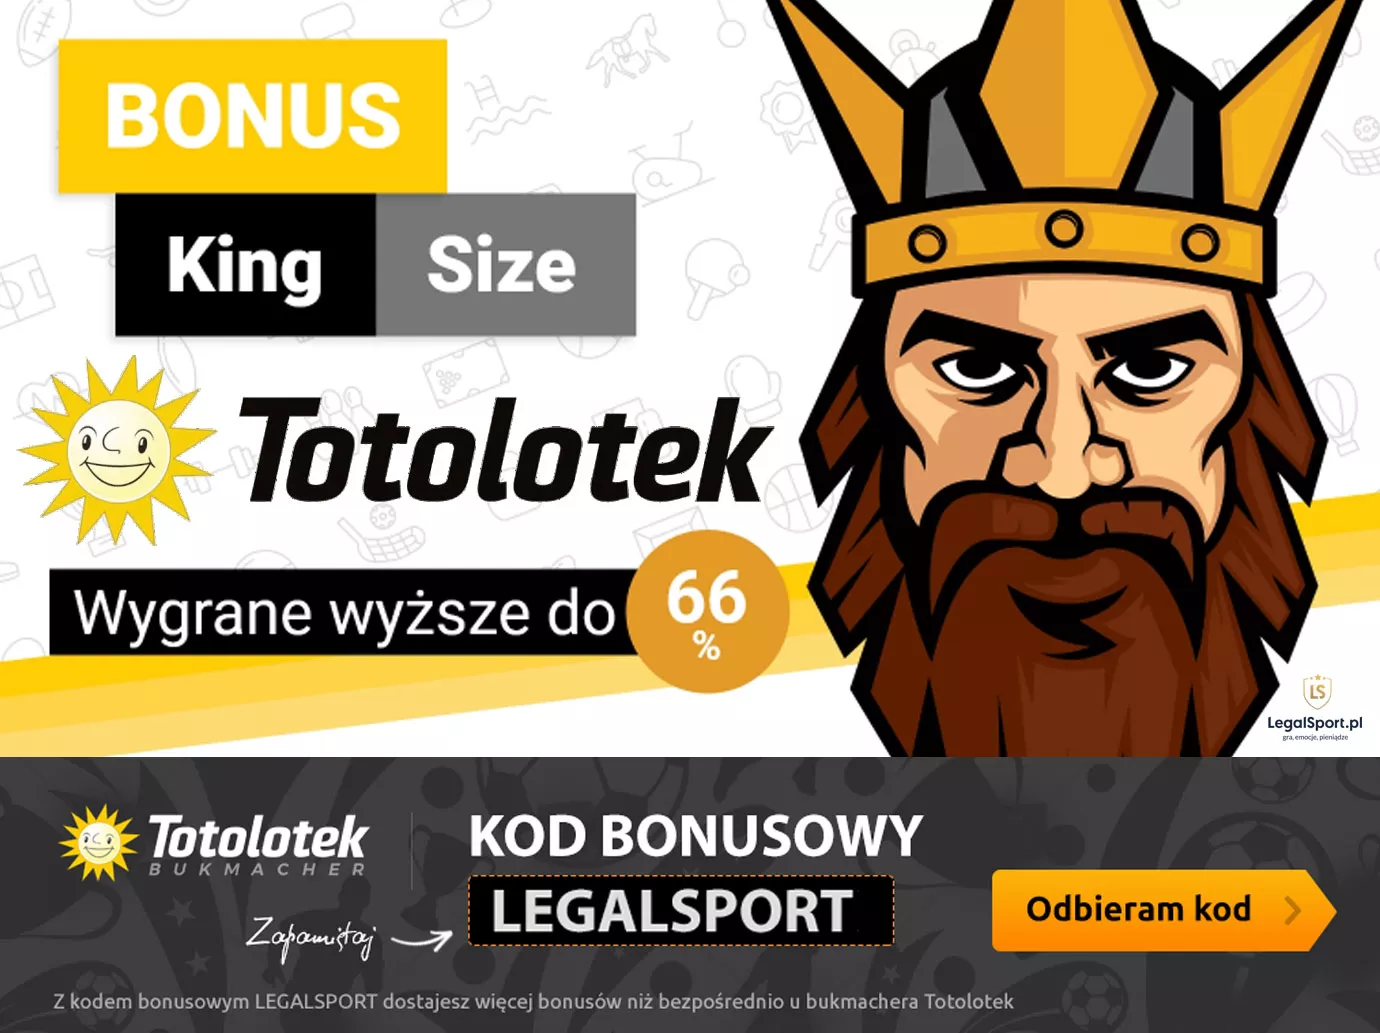 Bonus King Size w Totolotku